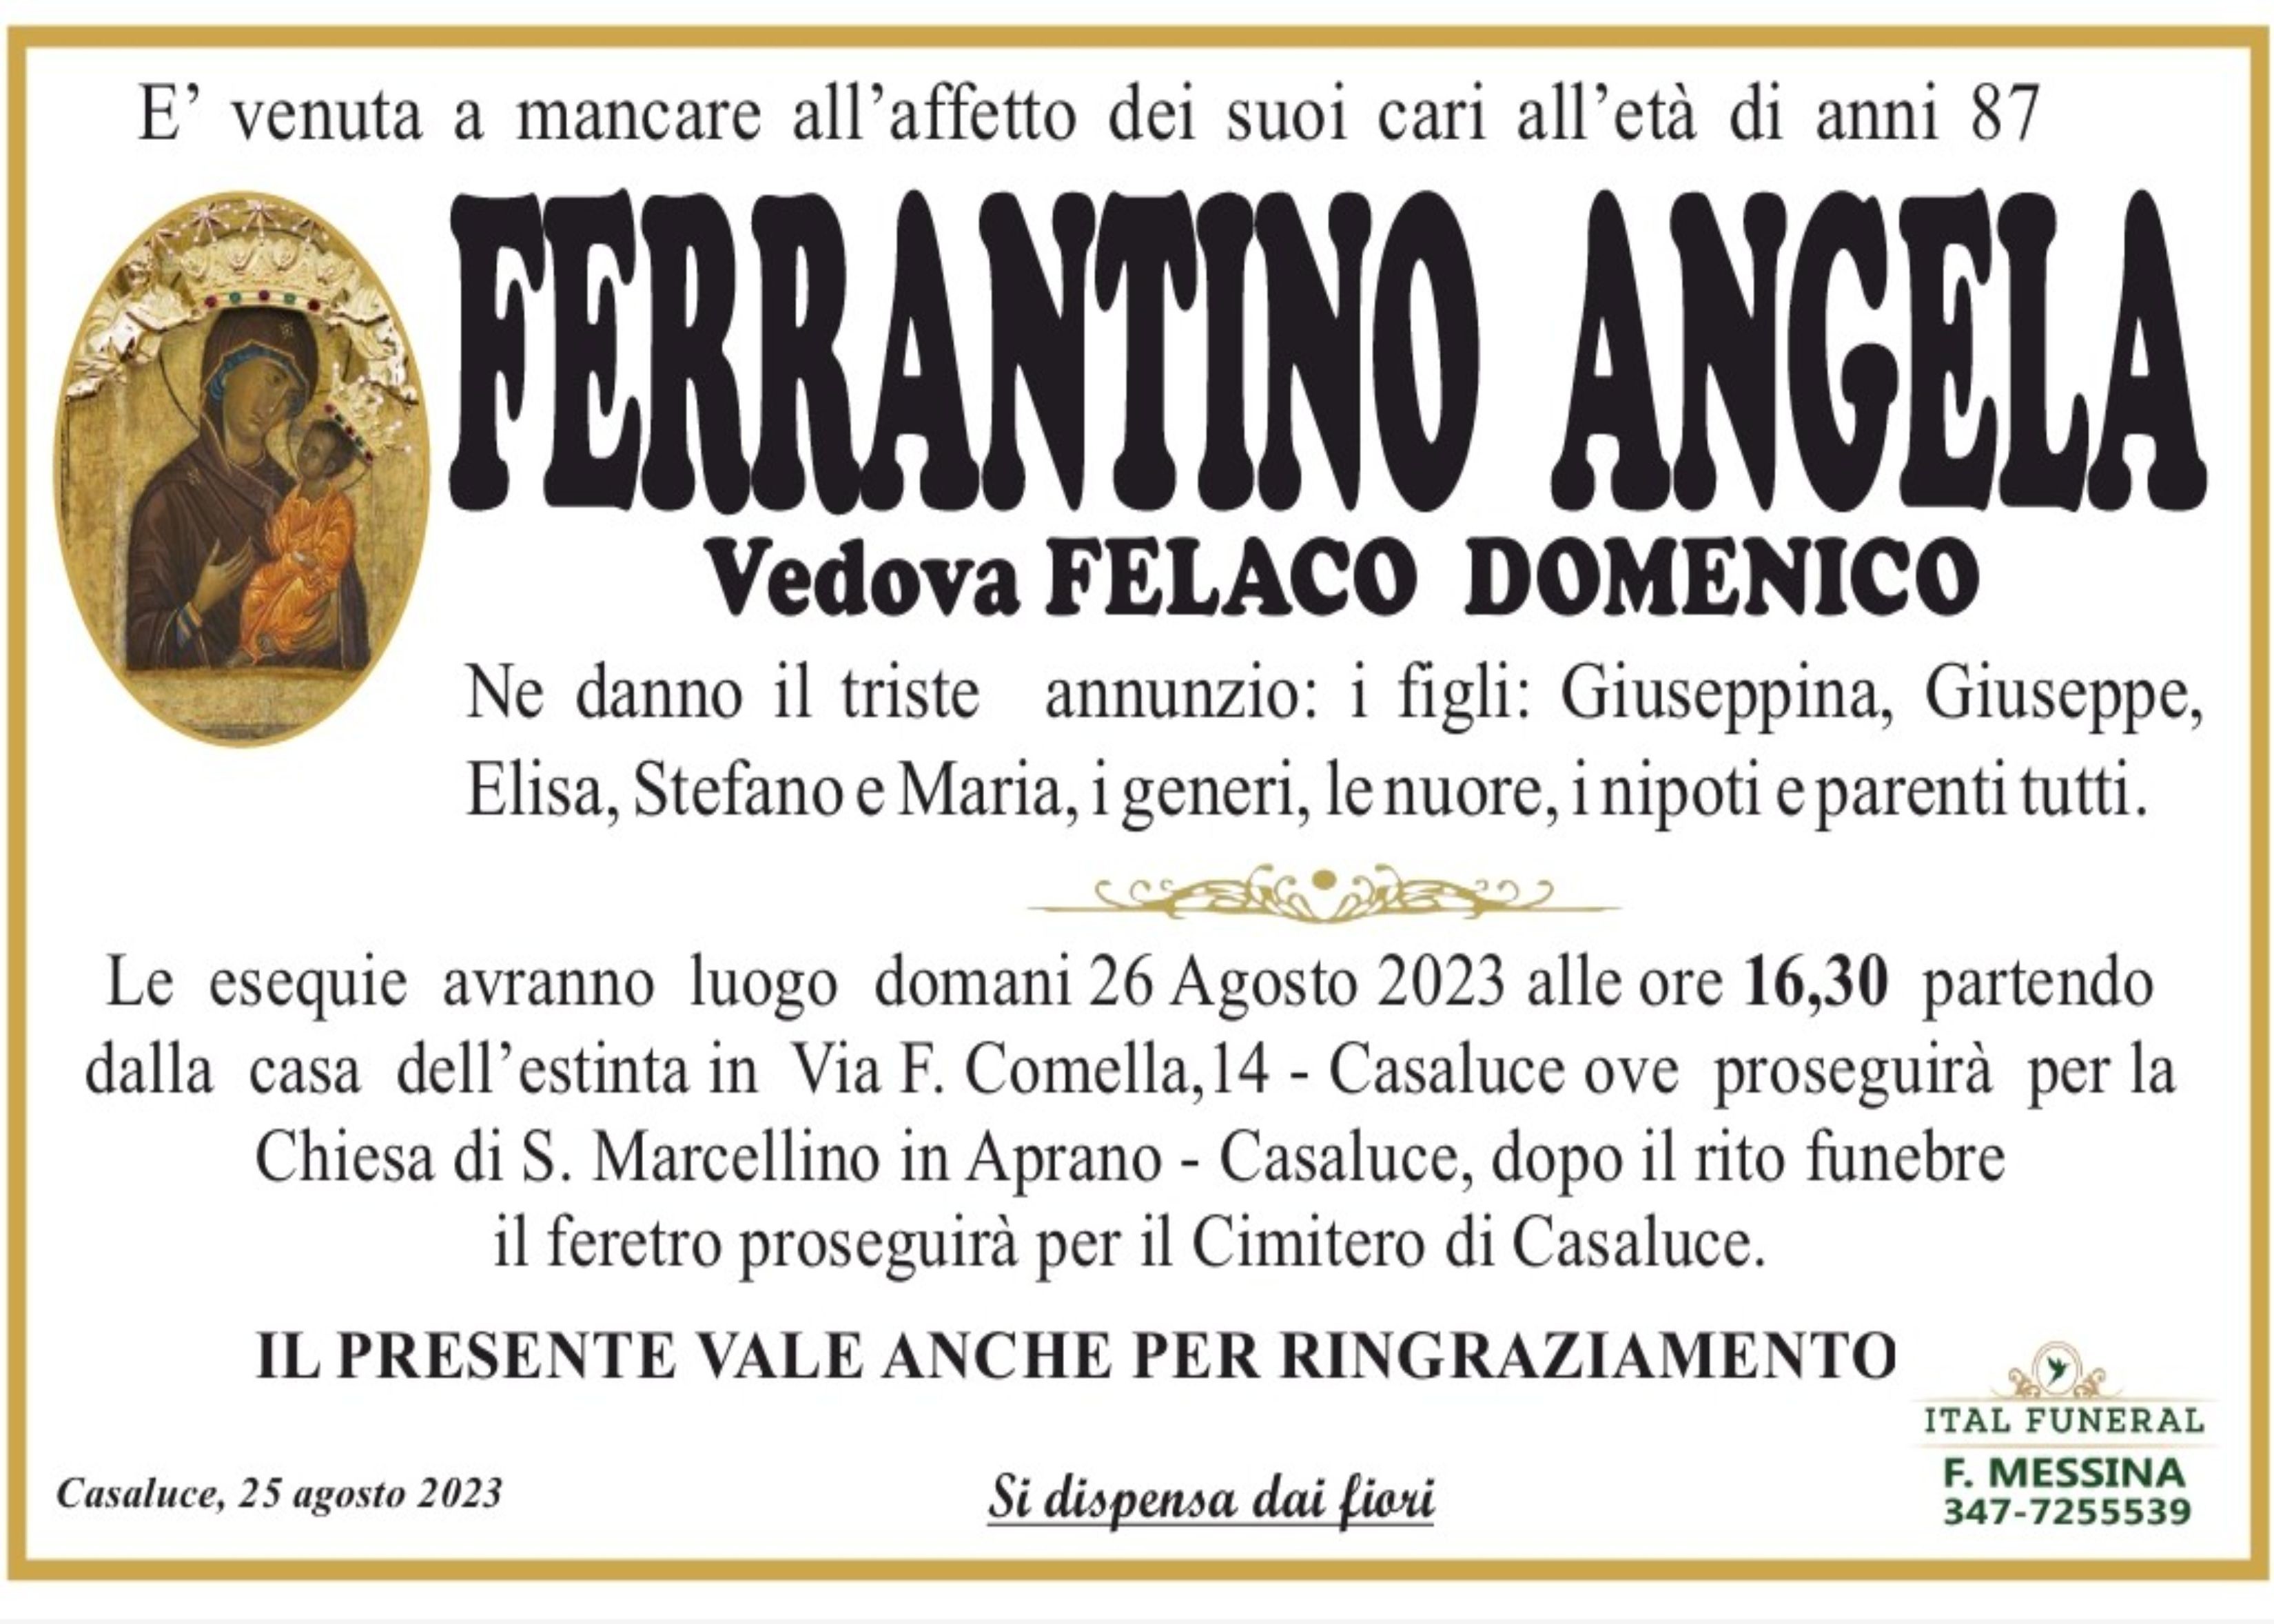 Angela Ferrantino